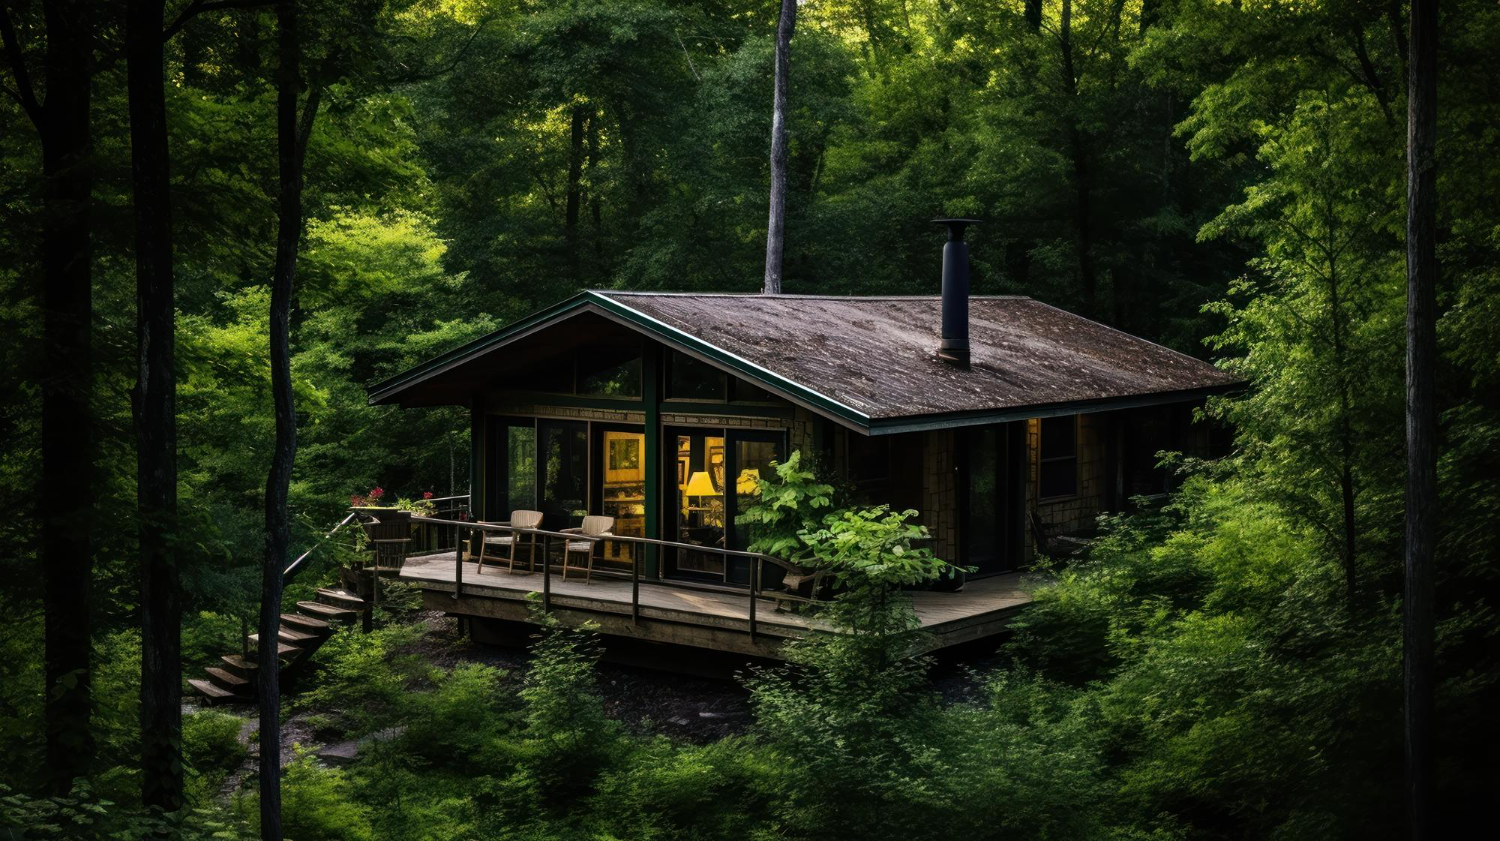 https://5565770.fs1.hubspotusercontent-na1.net/hubfs/5565770/aerial-view-small-cabin-hidden-dense-forest-greenery.jpg